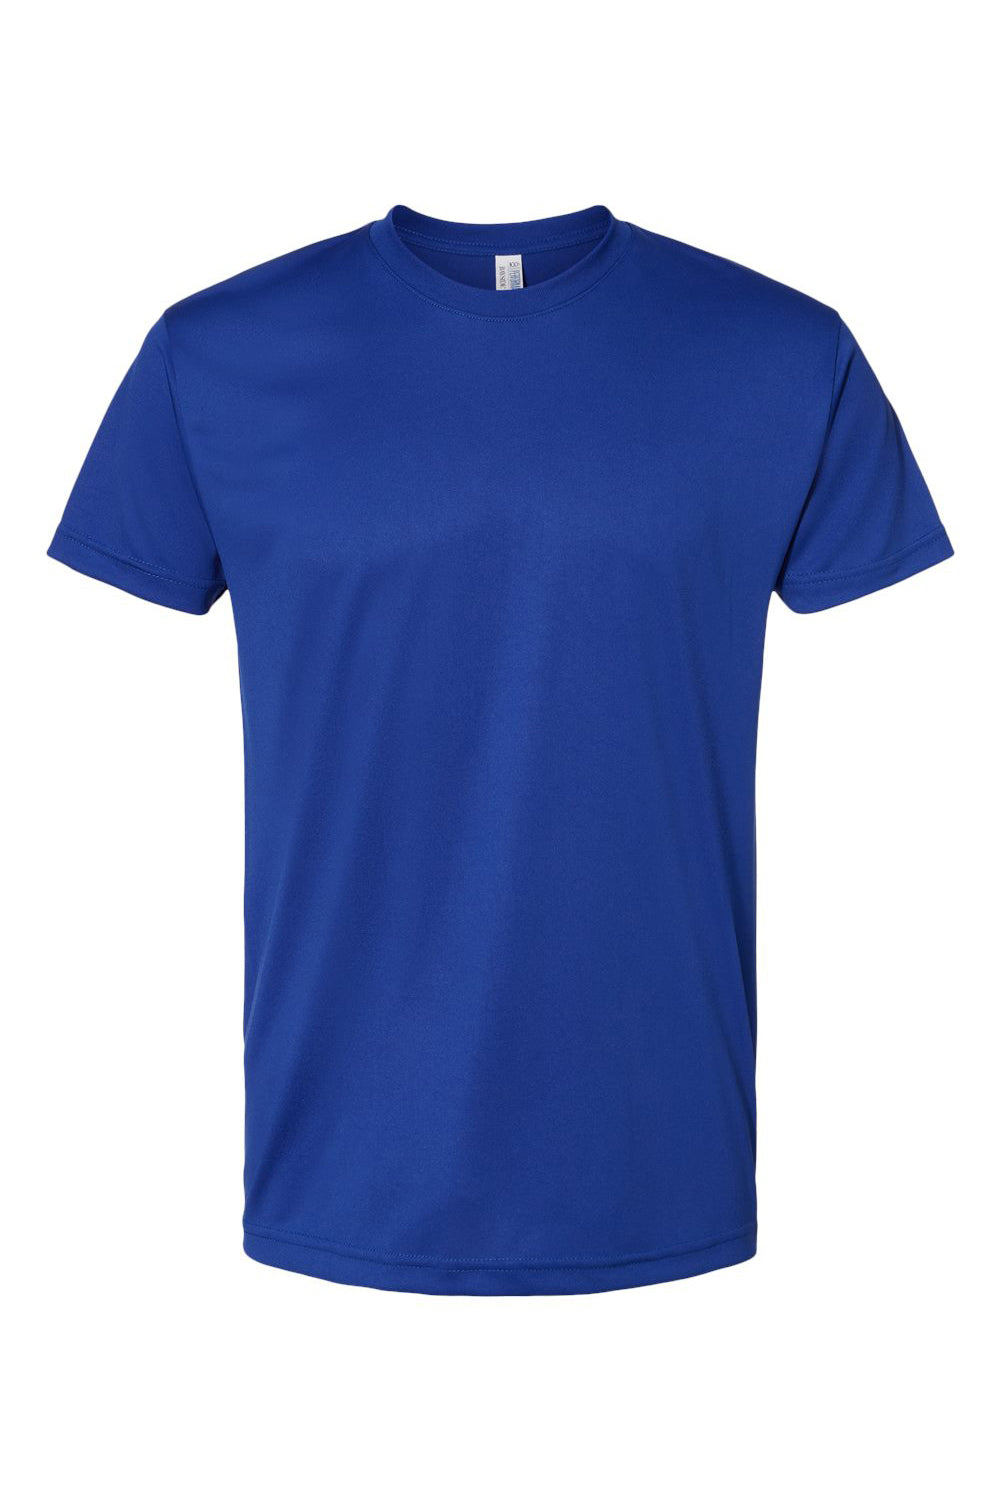 Bayside 5300 Mens USA Made Performance Short Sleeve Crewneck T-Shirt Royal Blue Flat Front